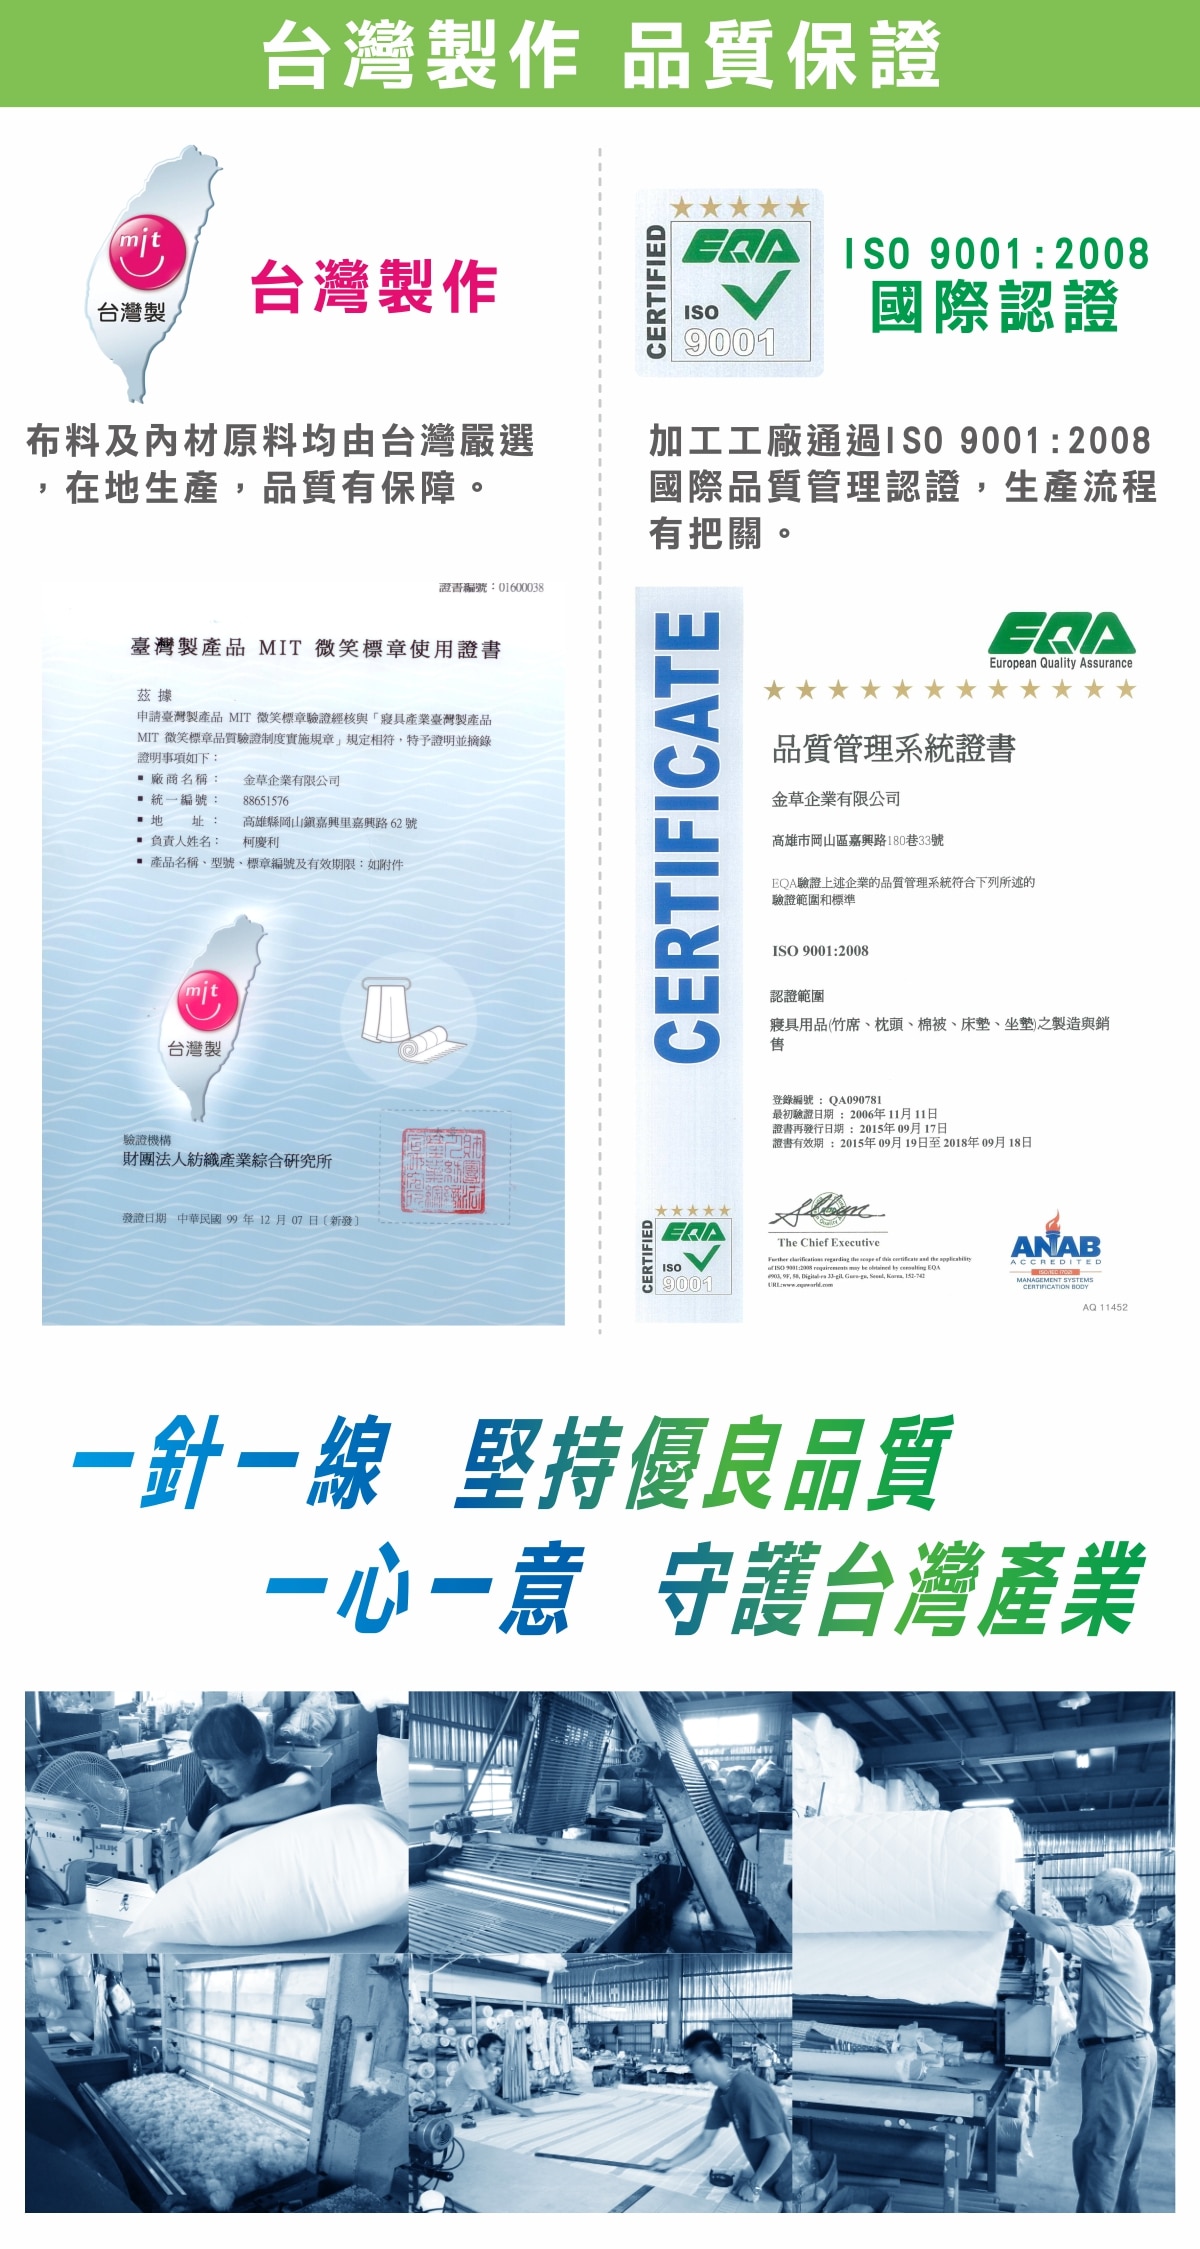 CASA 雙人記憶釋壓床墊 152 x 190 x 5 公分，台灣製造並通過國際認證。